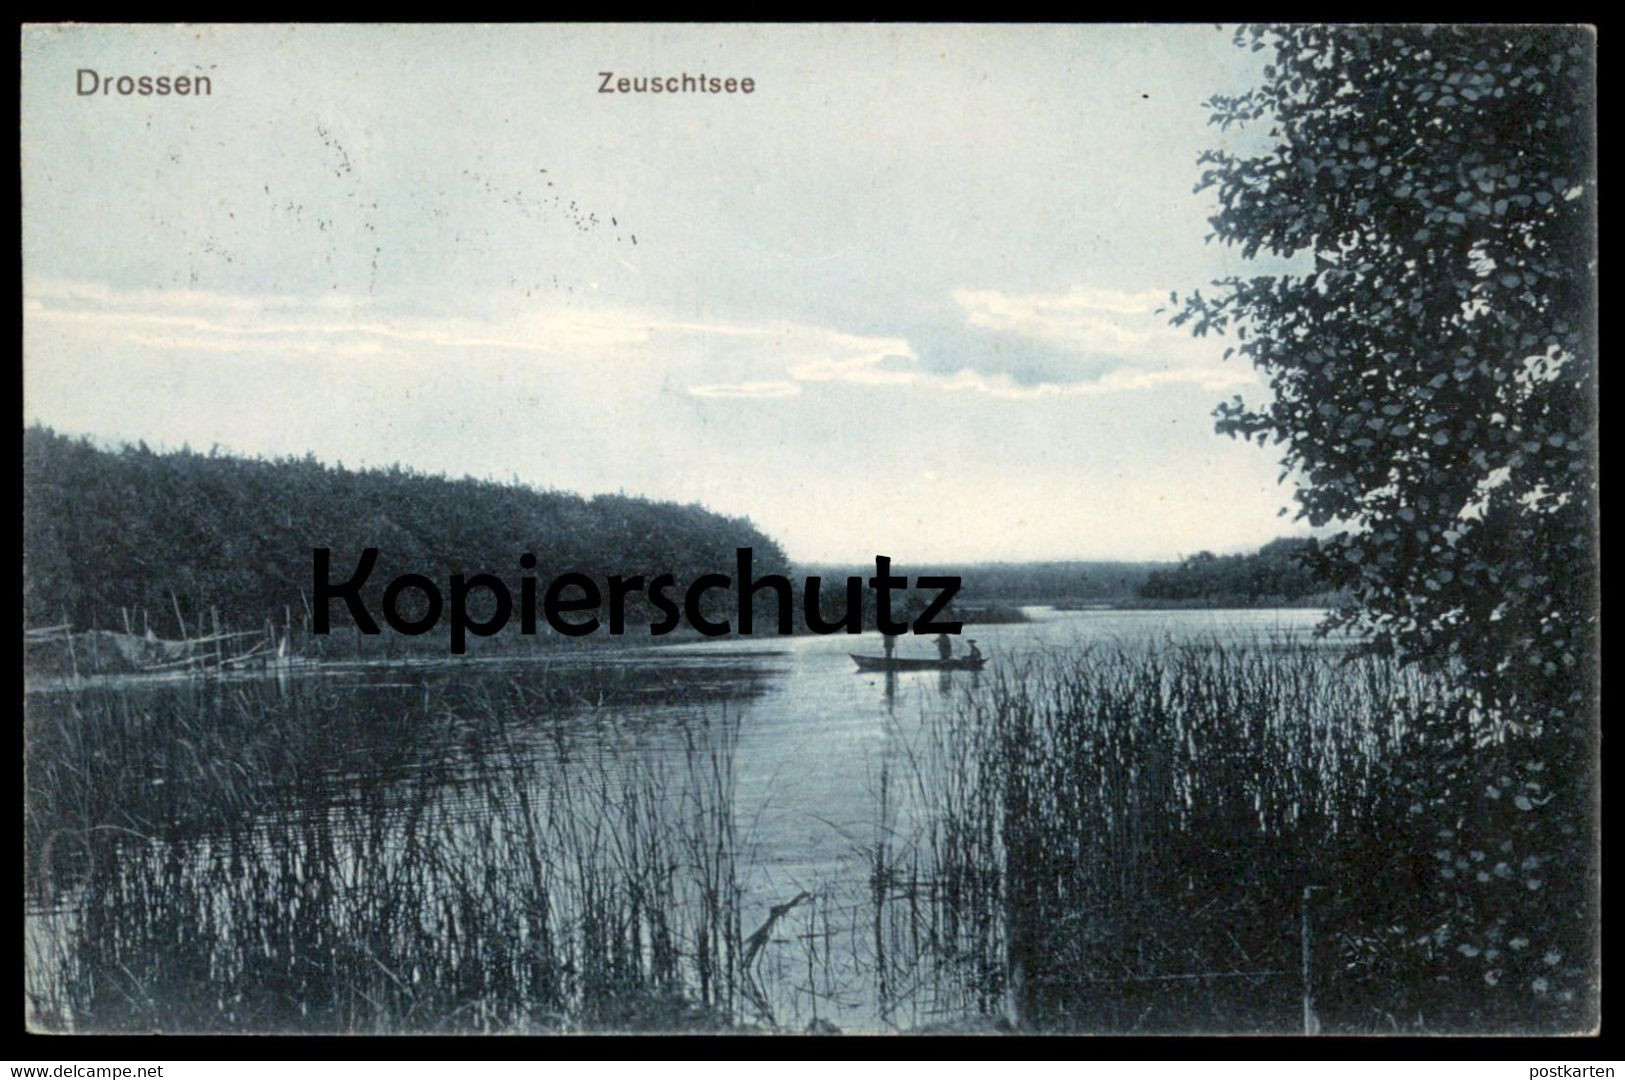 ALTE POSTKARTE DROSSEN ZEUSCHTSEE OSNO LUBUSKIE Czyste Wielki Slubicki Brandenburg Neumark Polska Poland Polen Postcard - Neumark